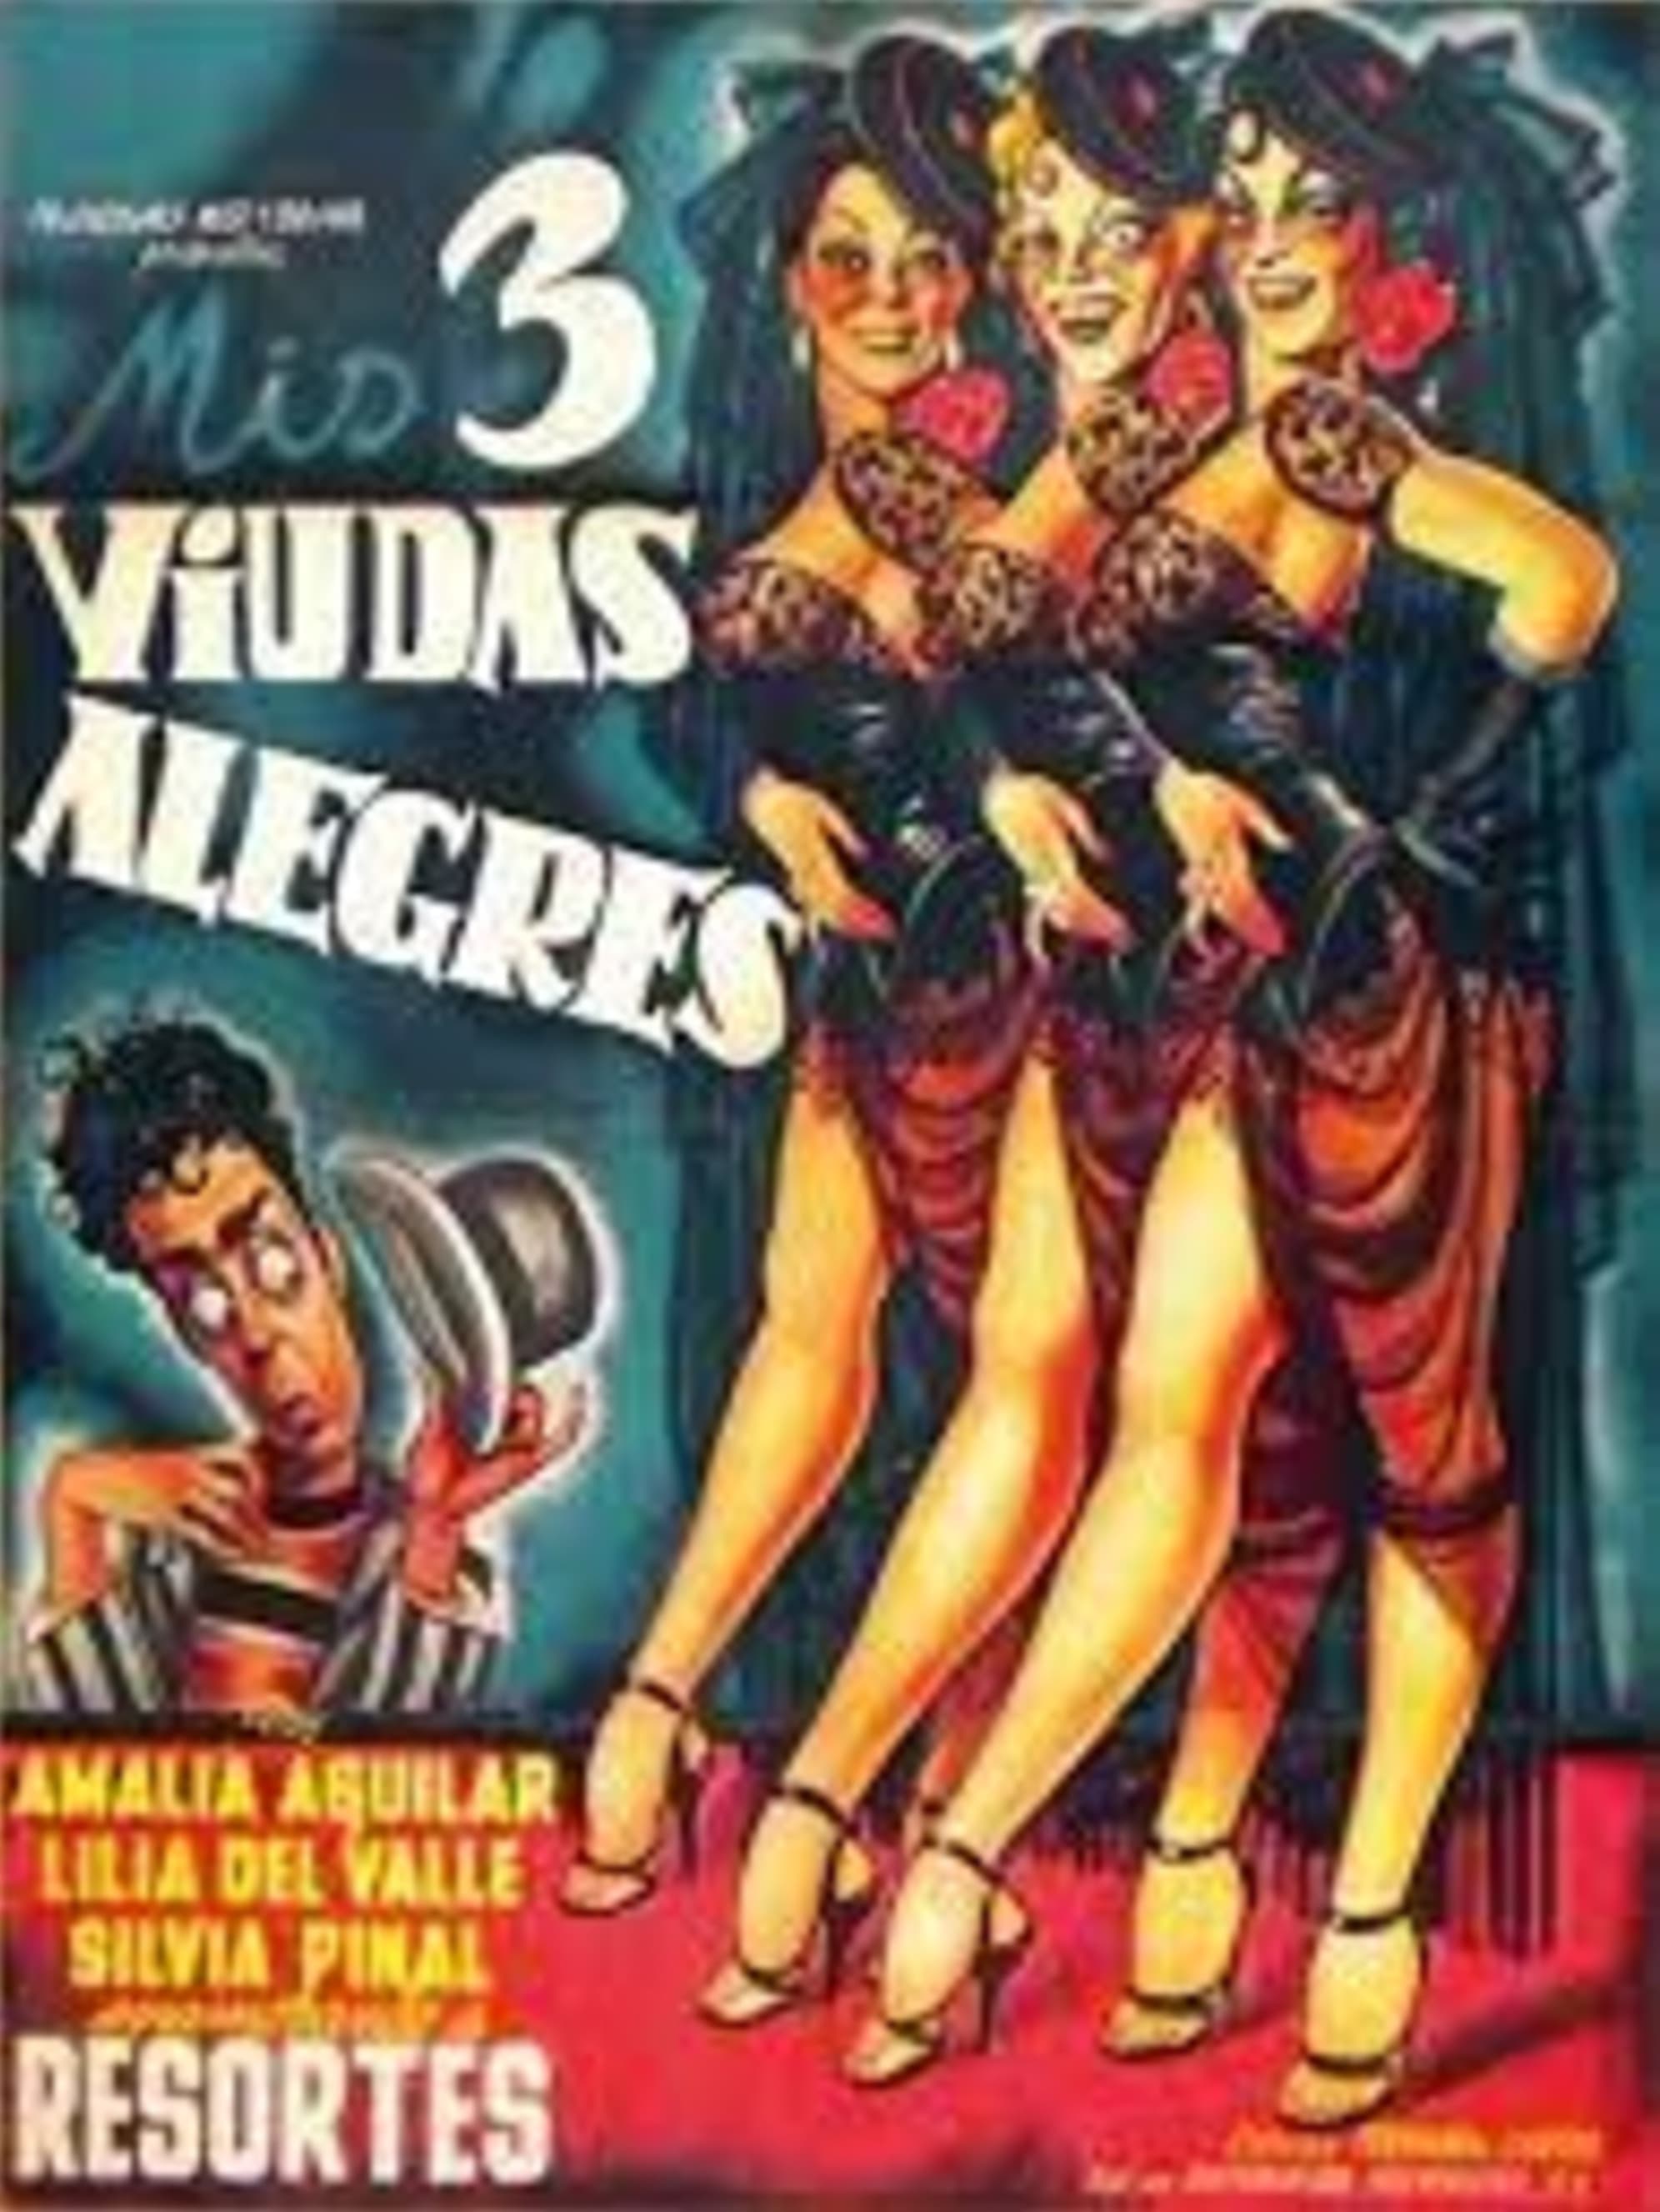 Mis tres viudas alegres (1953)